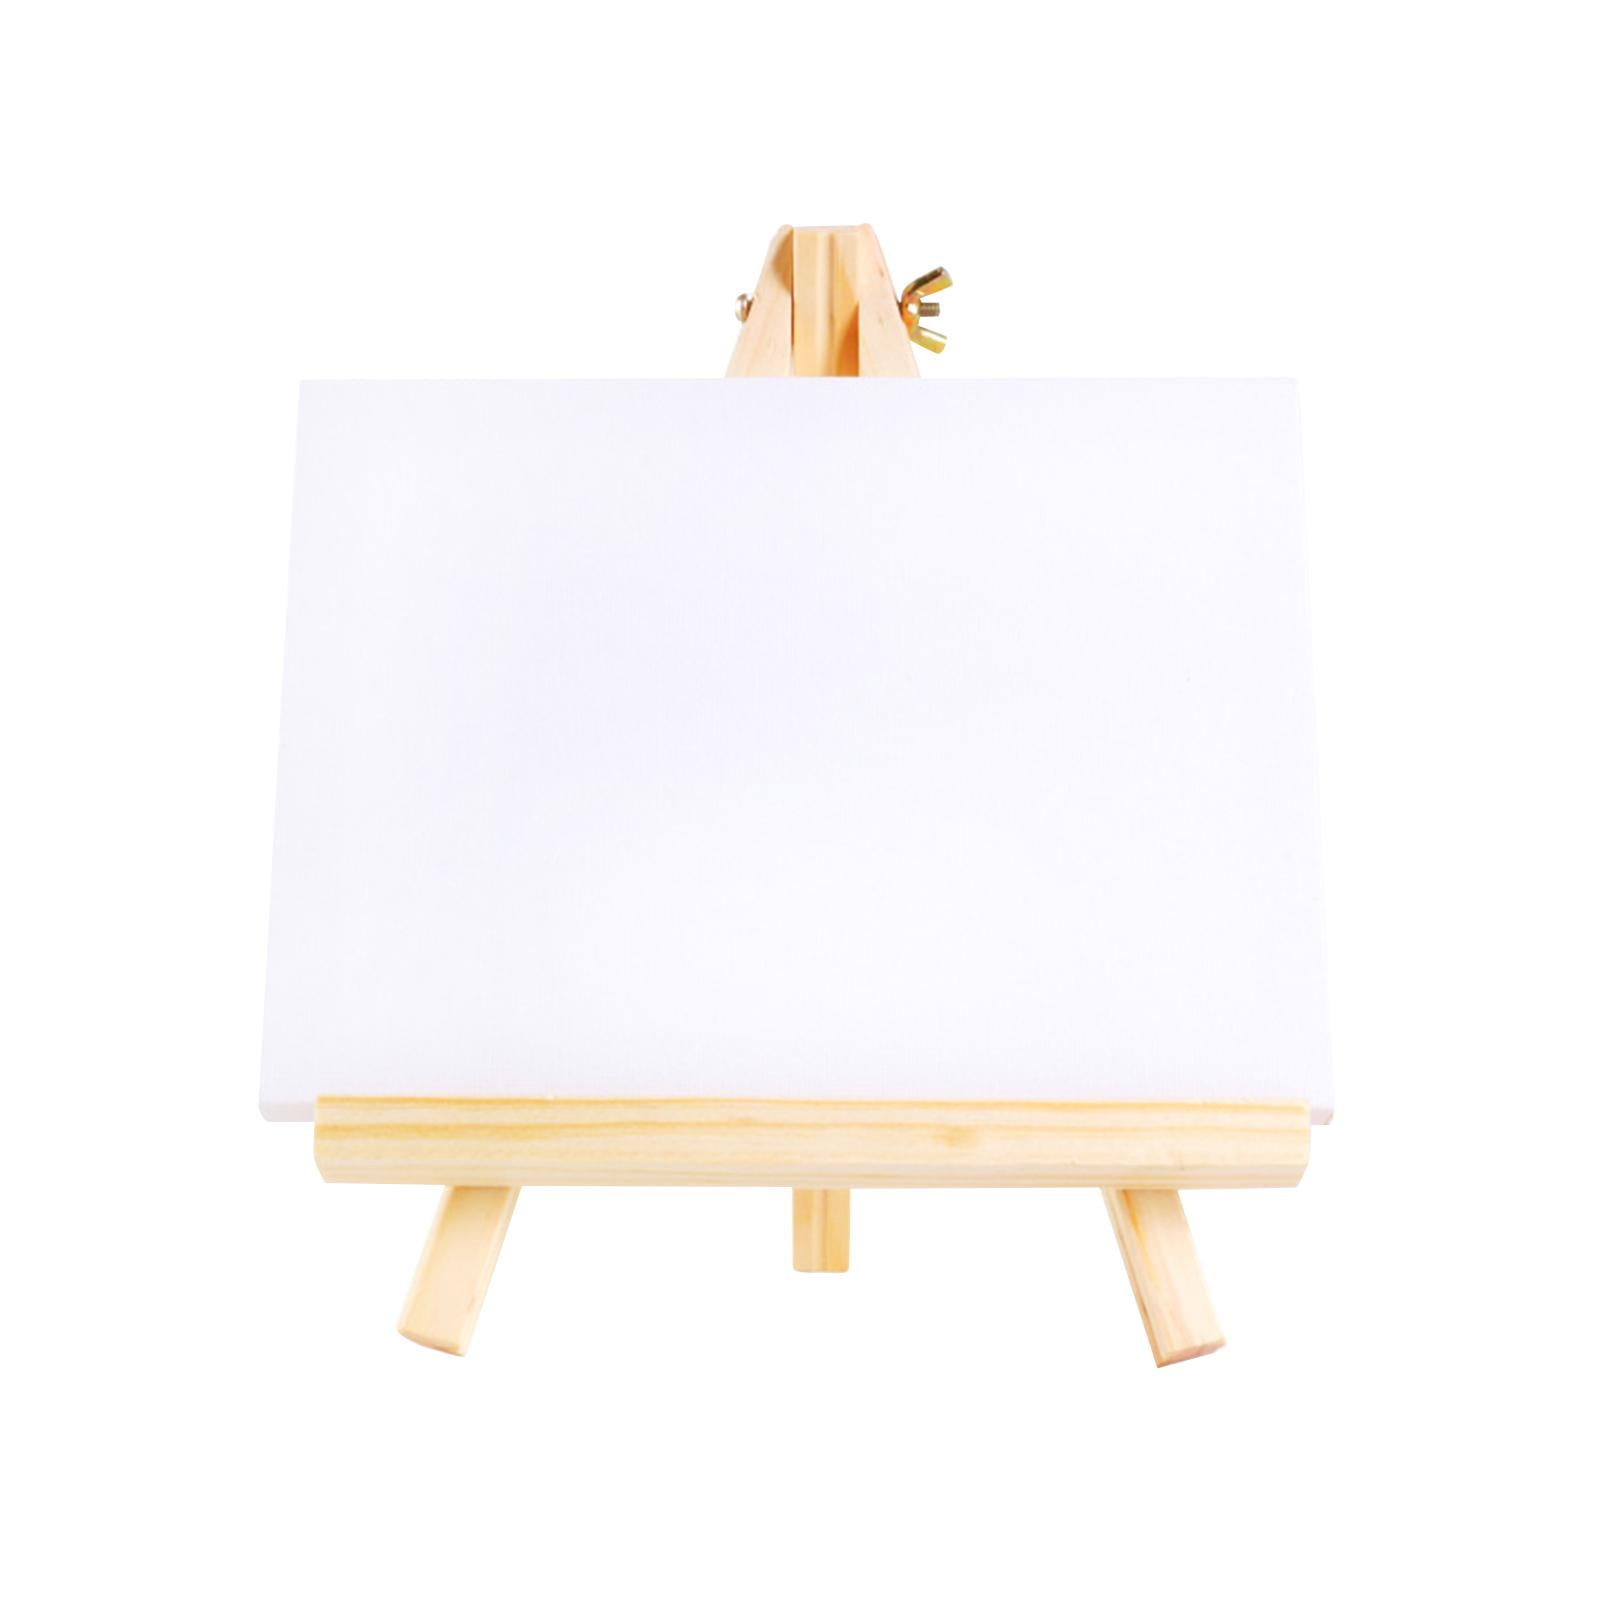 Wooden Floor Easel with Adjustable Shelf - Wedding Sign Display